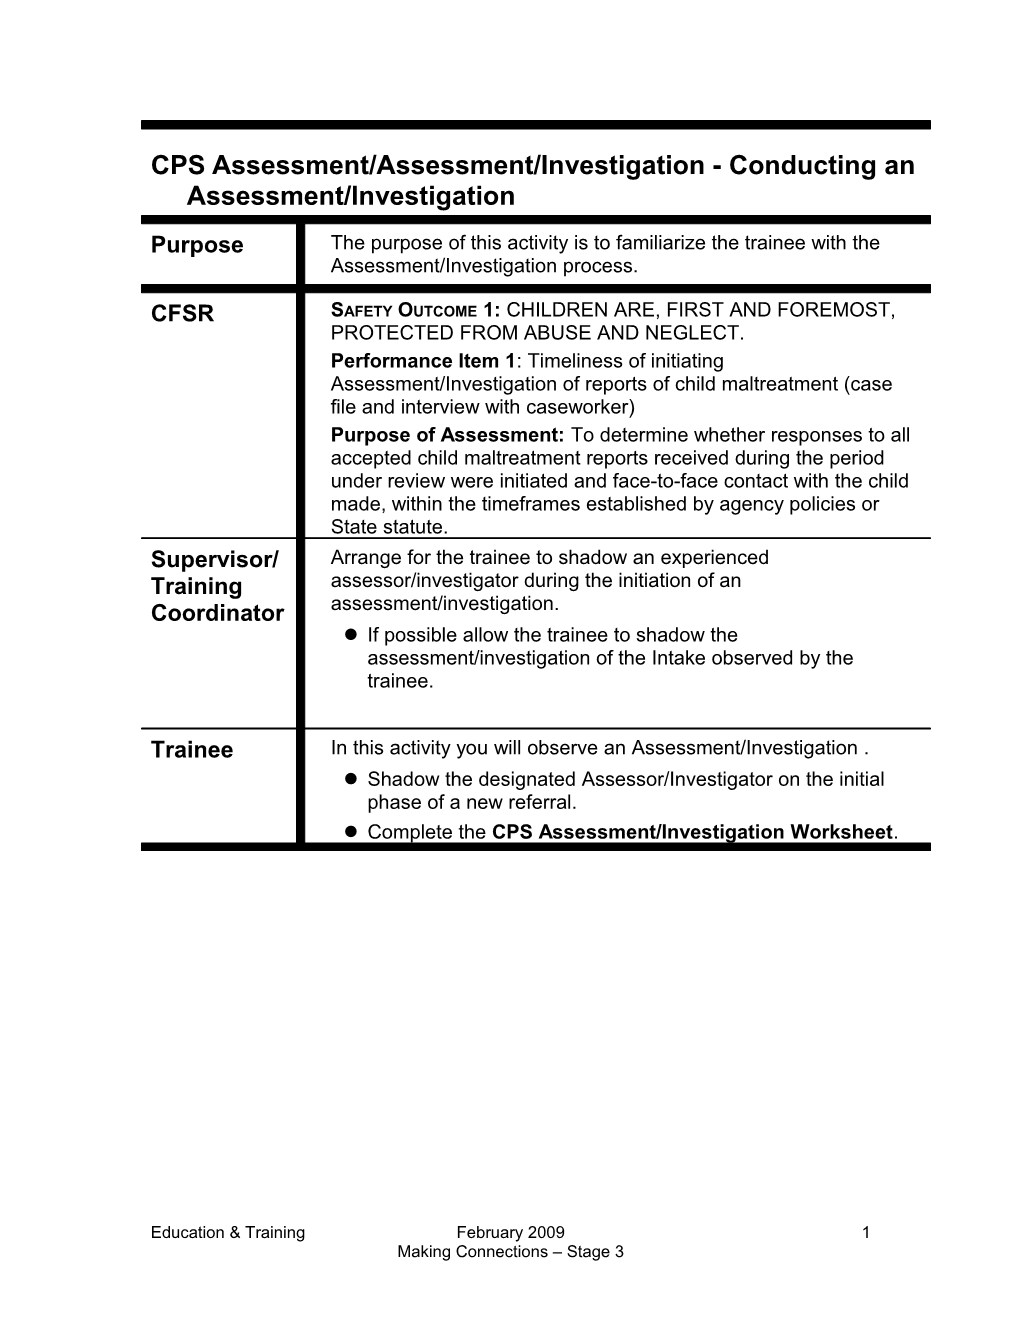 CPS Assessment/Assessment/Investigation - Conducting an Assessment/Investigation